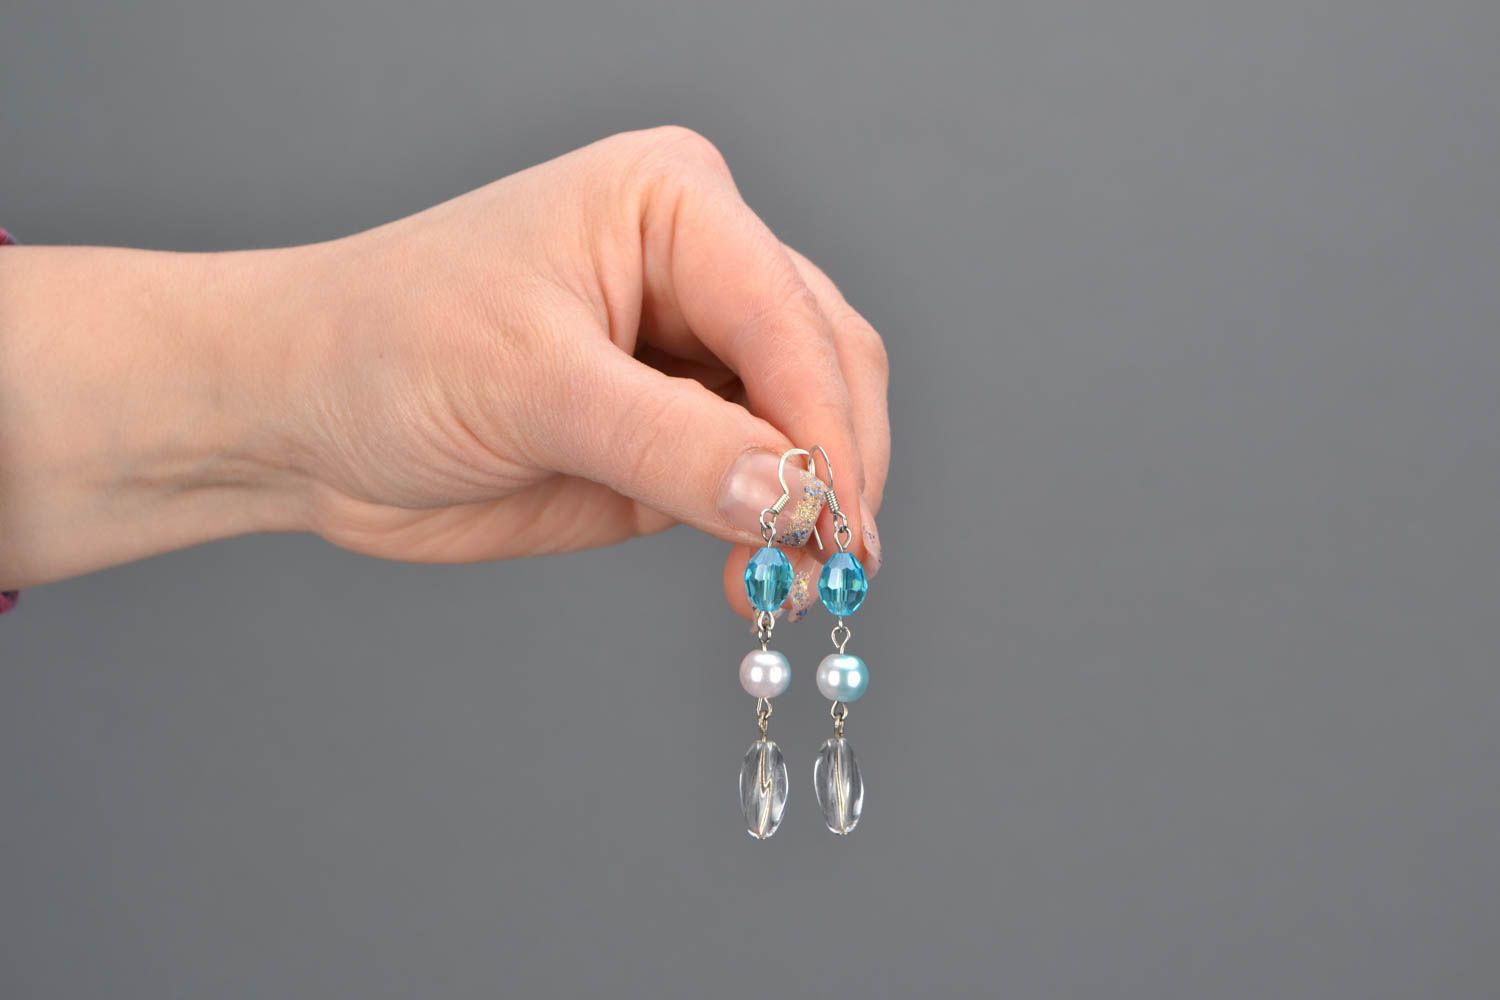 Homemade earrings with beads photo 2